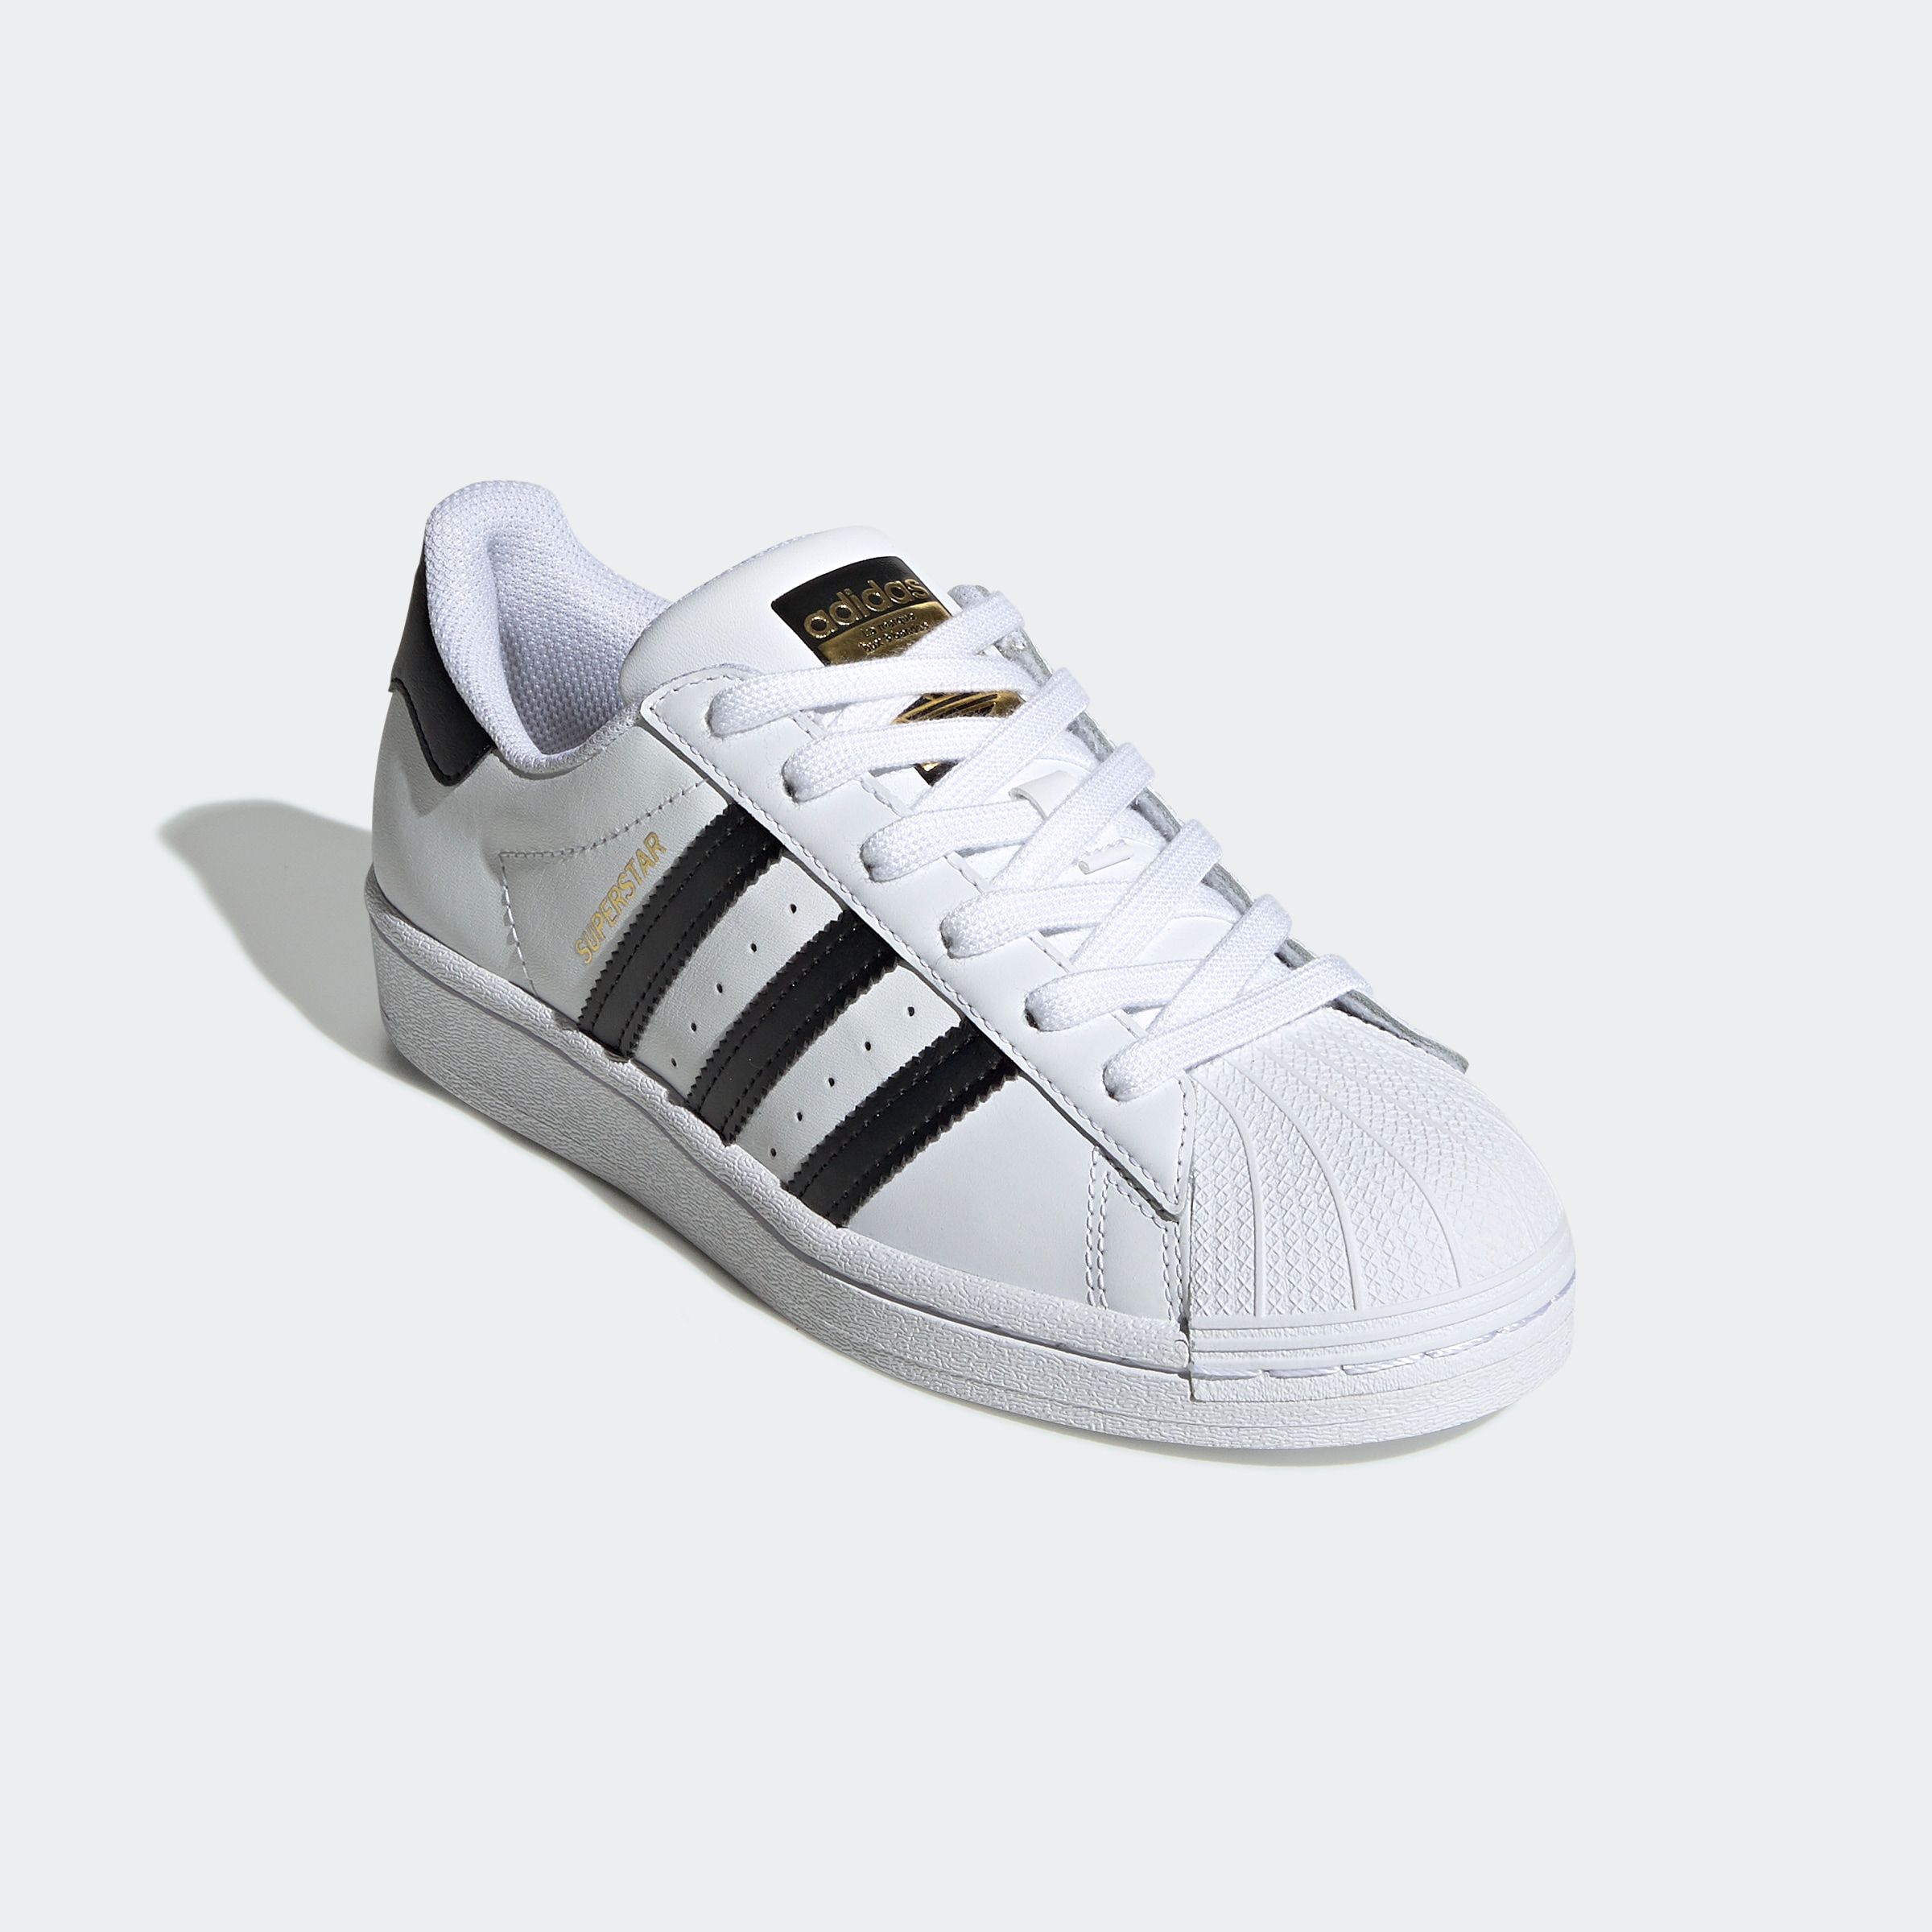 adidas Unisex-Kinder Superstar C Sneaker, FTWR White/Core Black/FTWR White, 33 EU